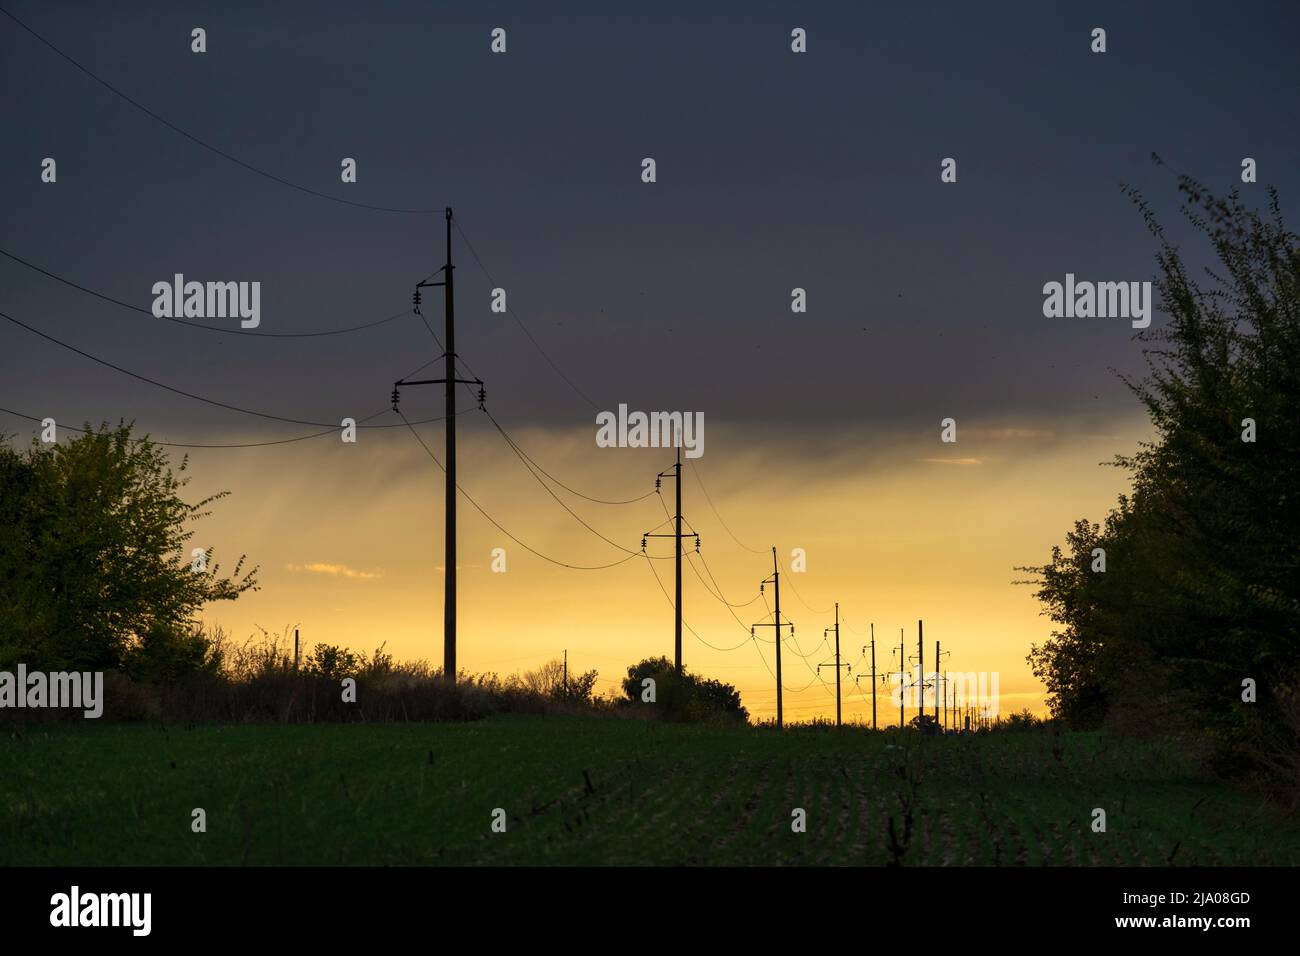 Stromleitungen bei Sonnenuntergang, Hochspannungsmast, Hochspannungsturm Himmel Sonnenuntergang Hintergrund Stockfoto